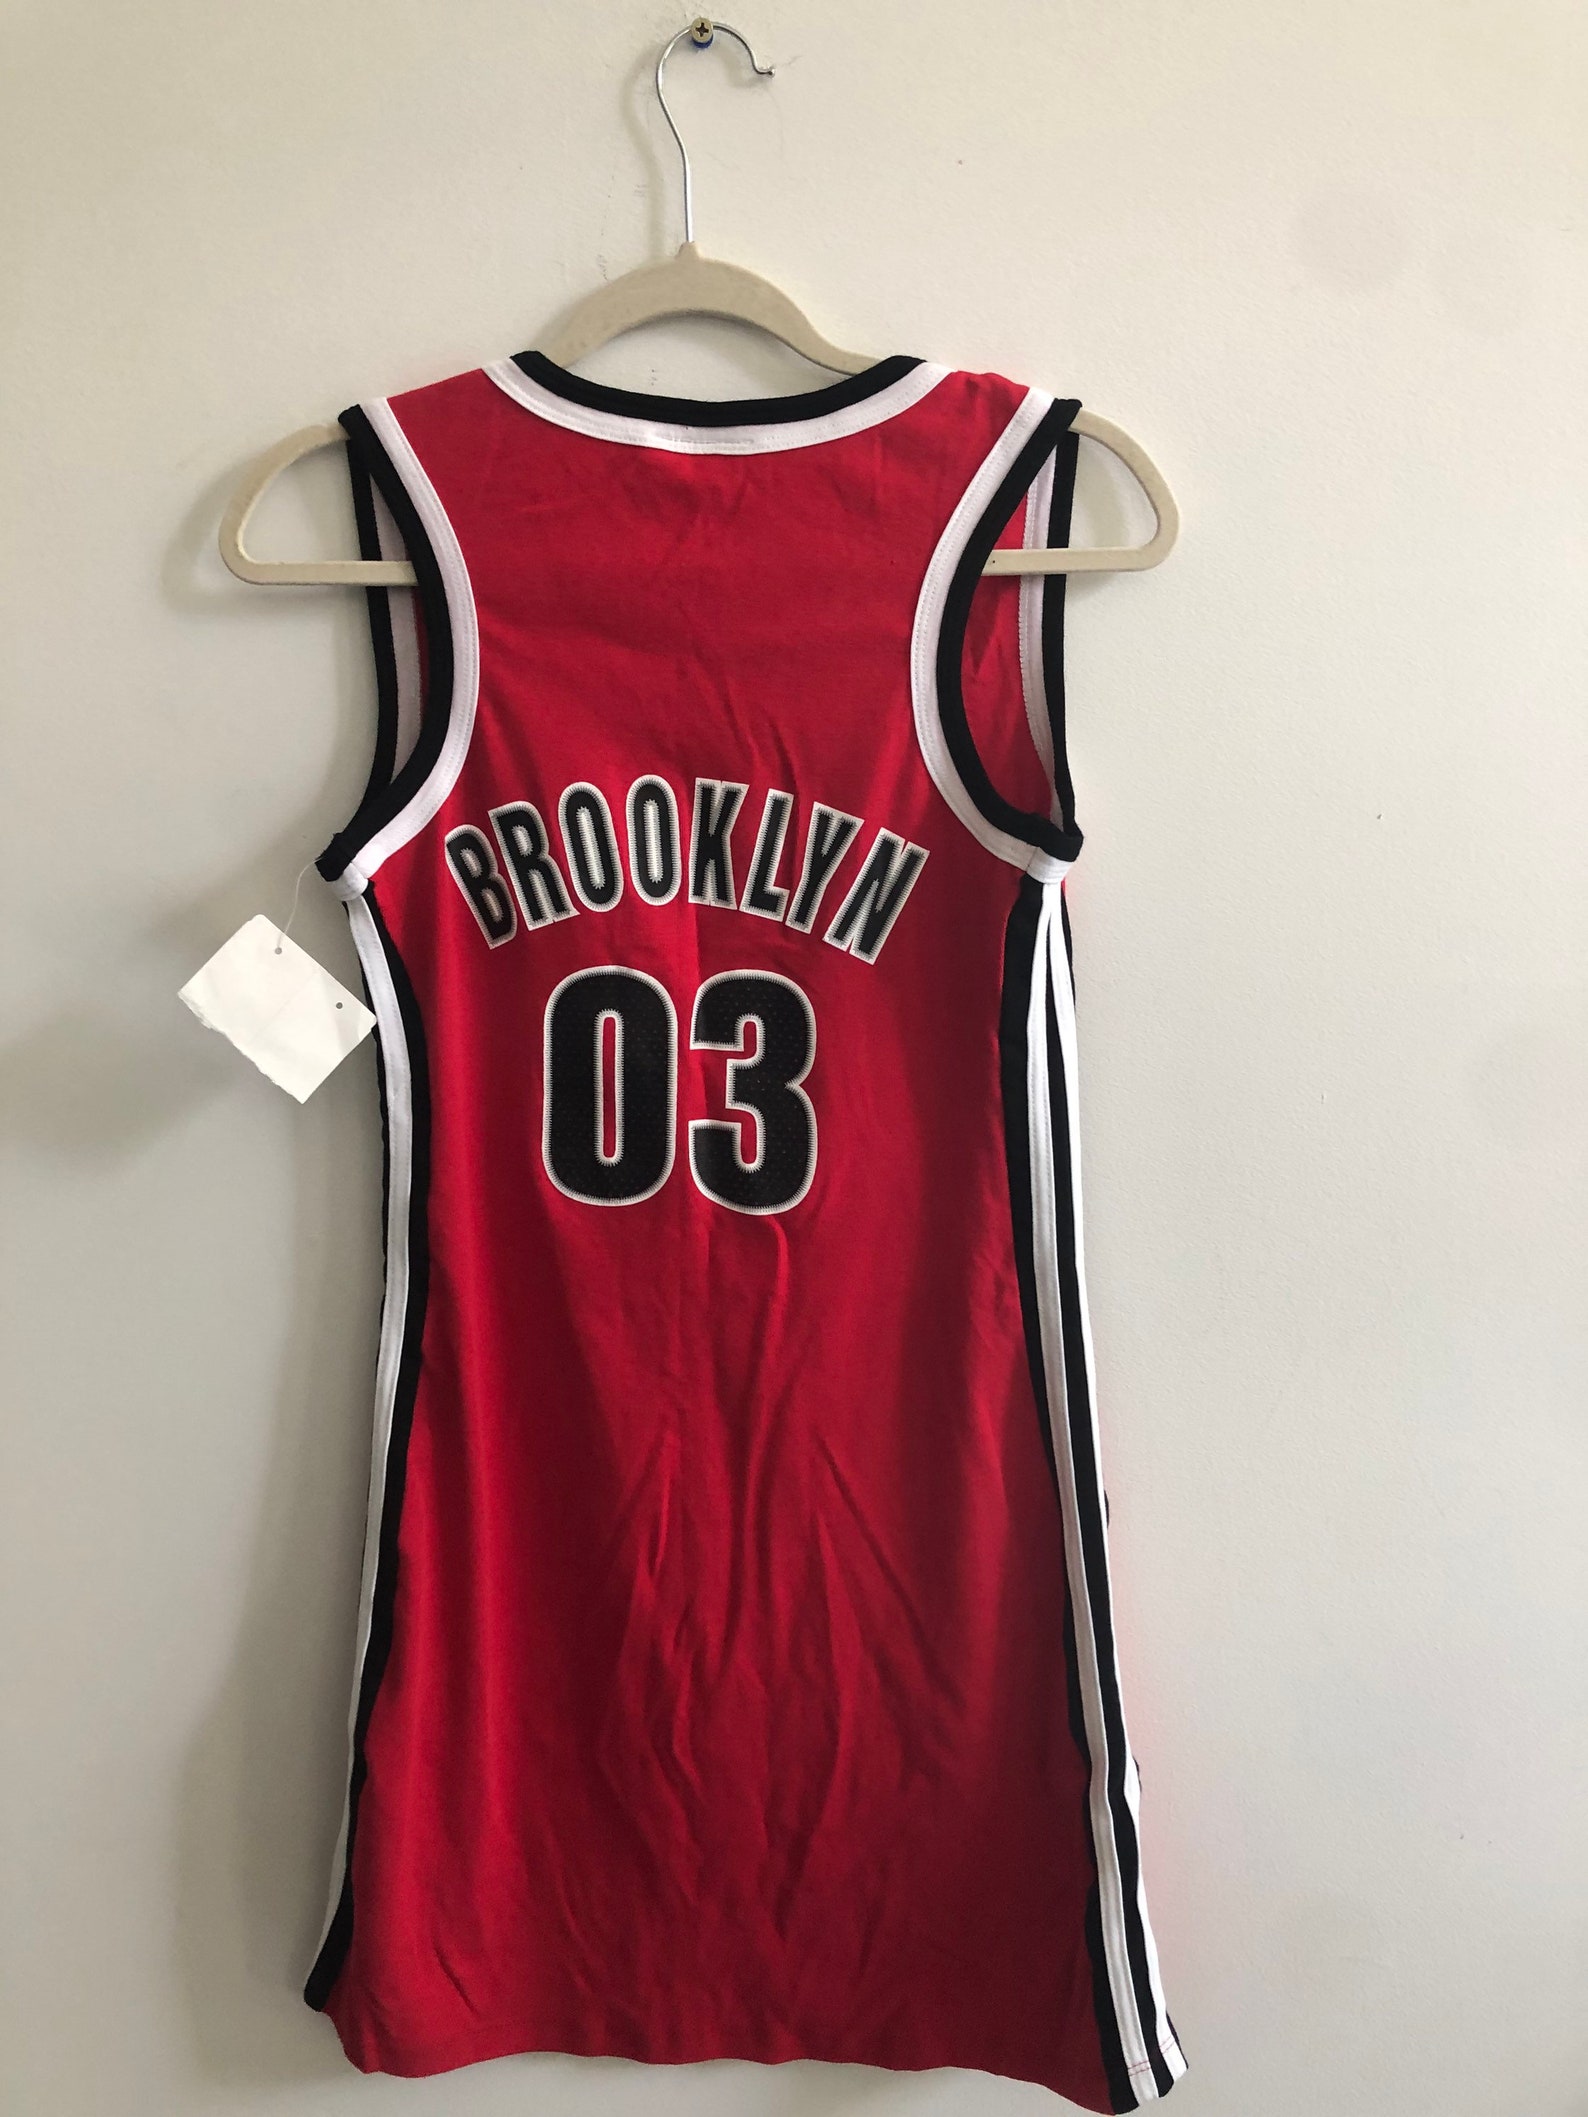 Brooklyn Minimalist Red Basketball Jersey - Etsy Sweden